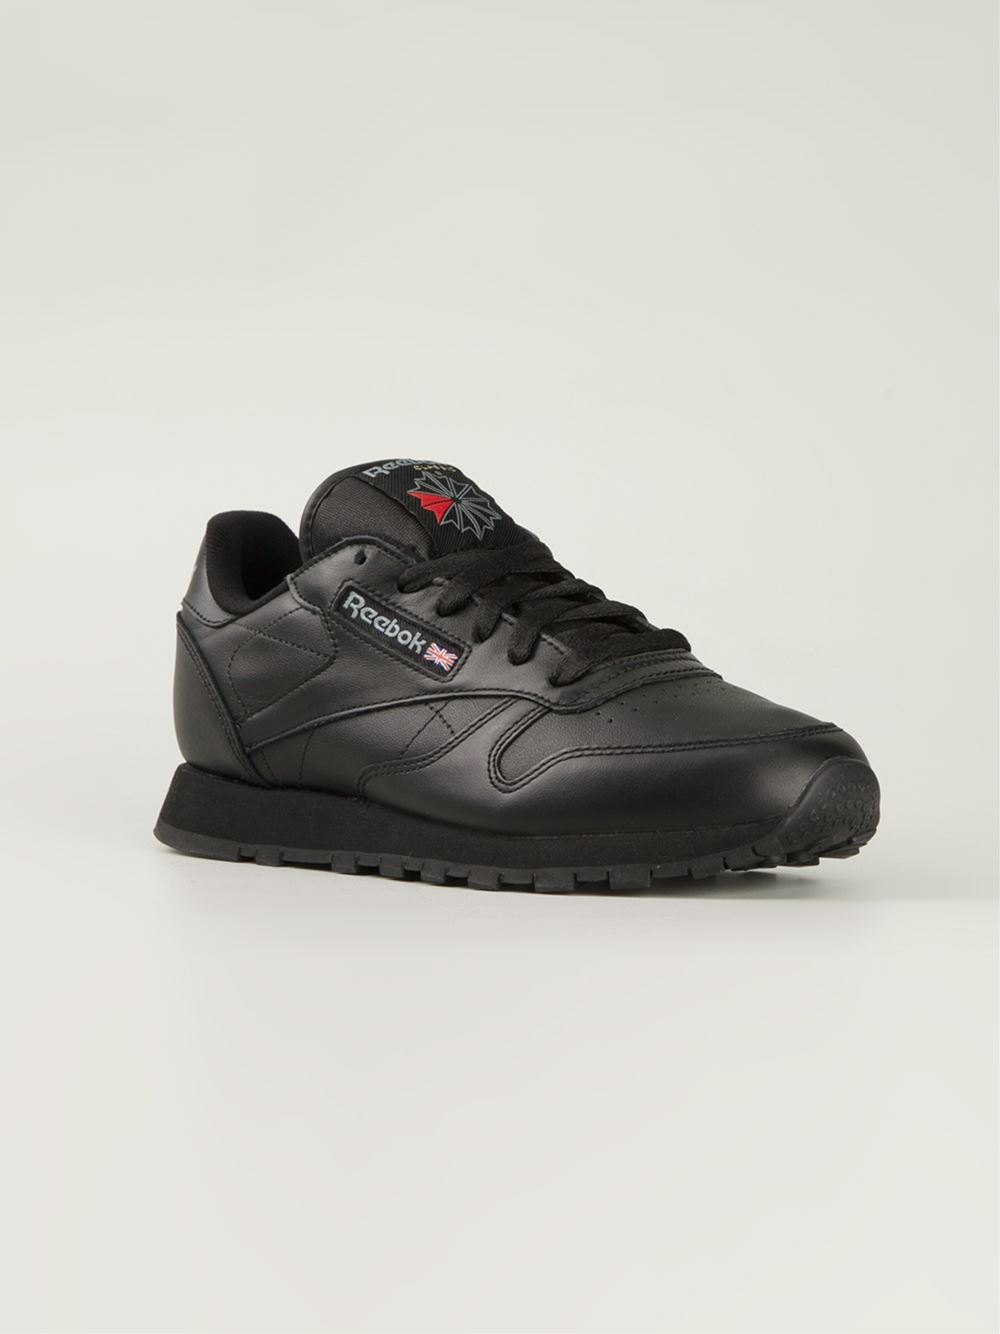 Reebok Classic Leather Sneakers in Black | Lyst